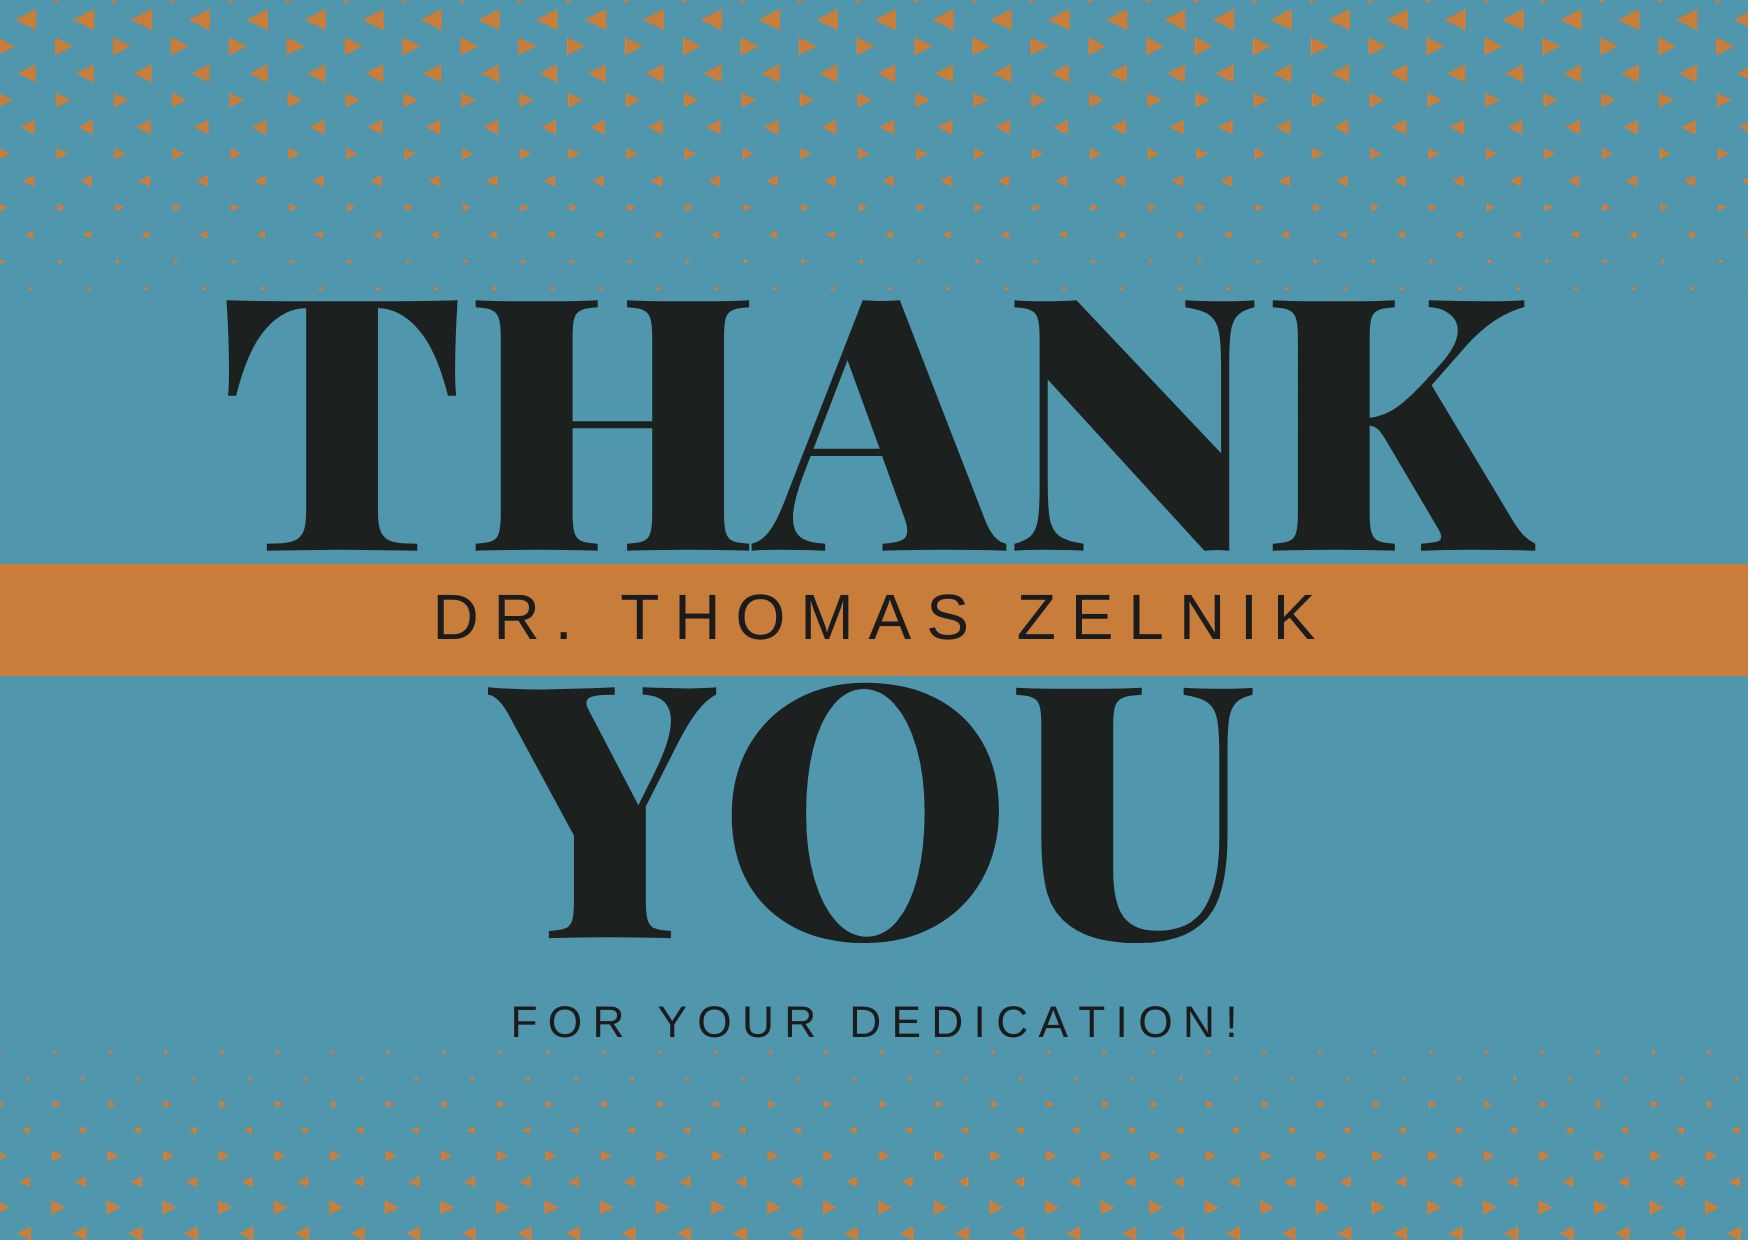 A-note-of-gratitude-for-dr-thomas-zelnik-flinn-board